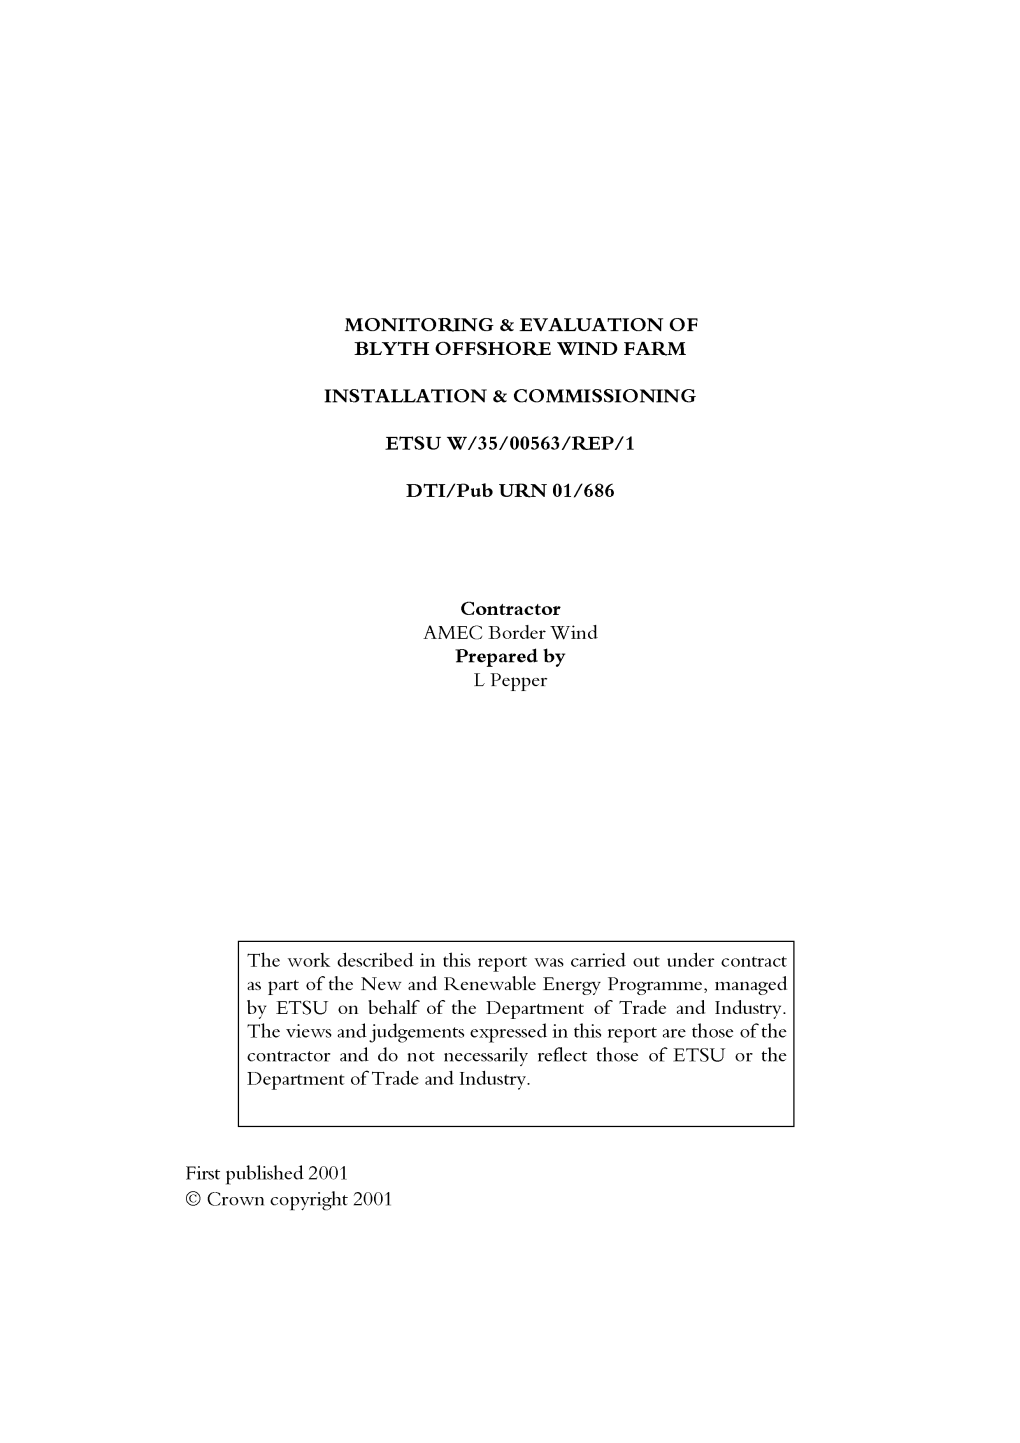 MONITORING & EVALUATION of BLYTH OFFSHORE WIND FARM INSTALLATION & COMMISSIONING ETSU W/35/00563/REP/1 DTI/Pub URN 01/68